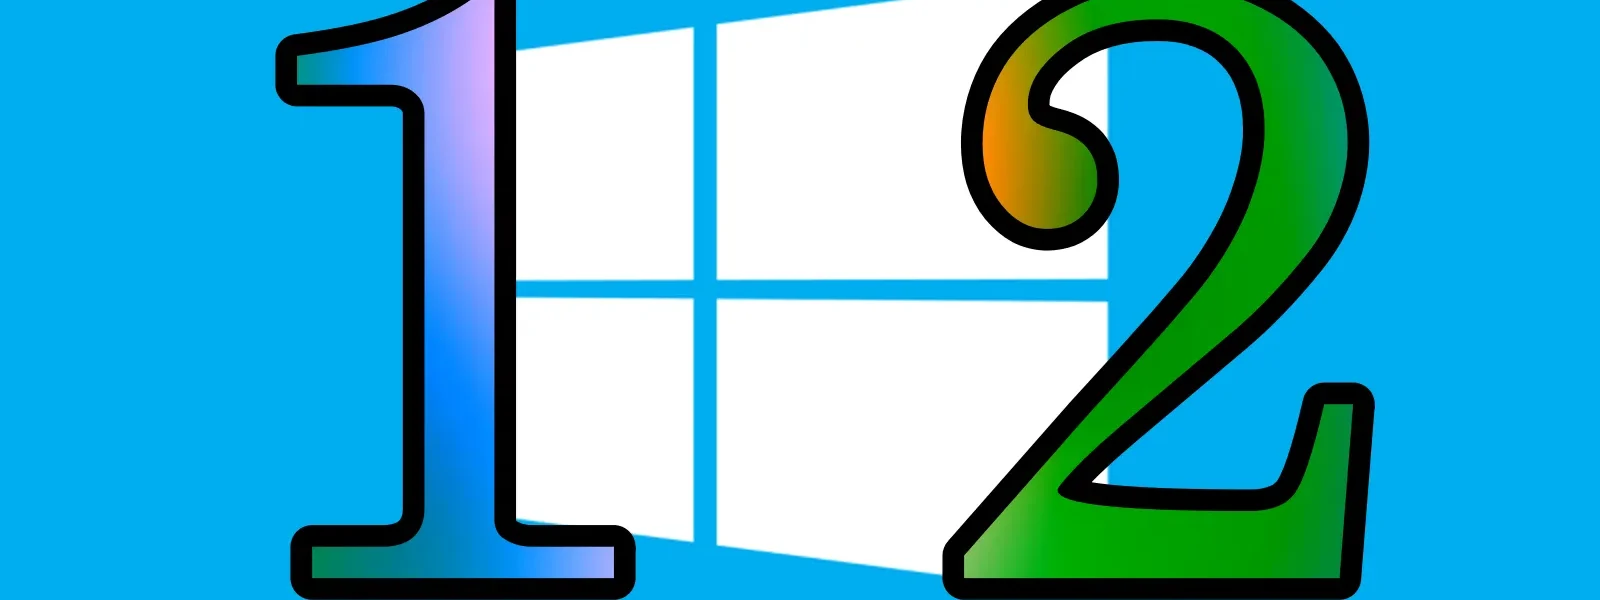 Windows 12 cena